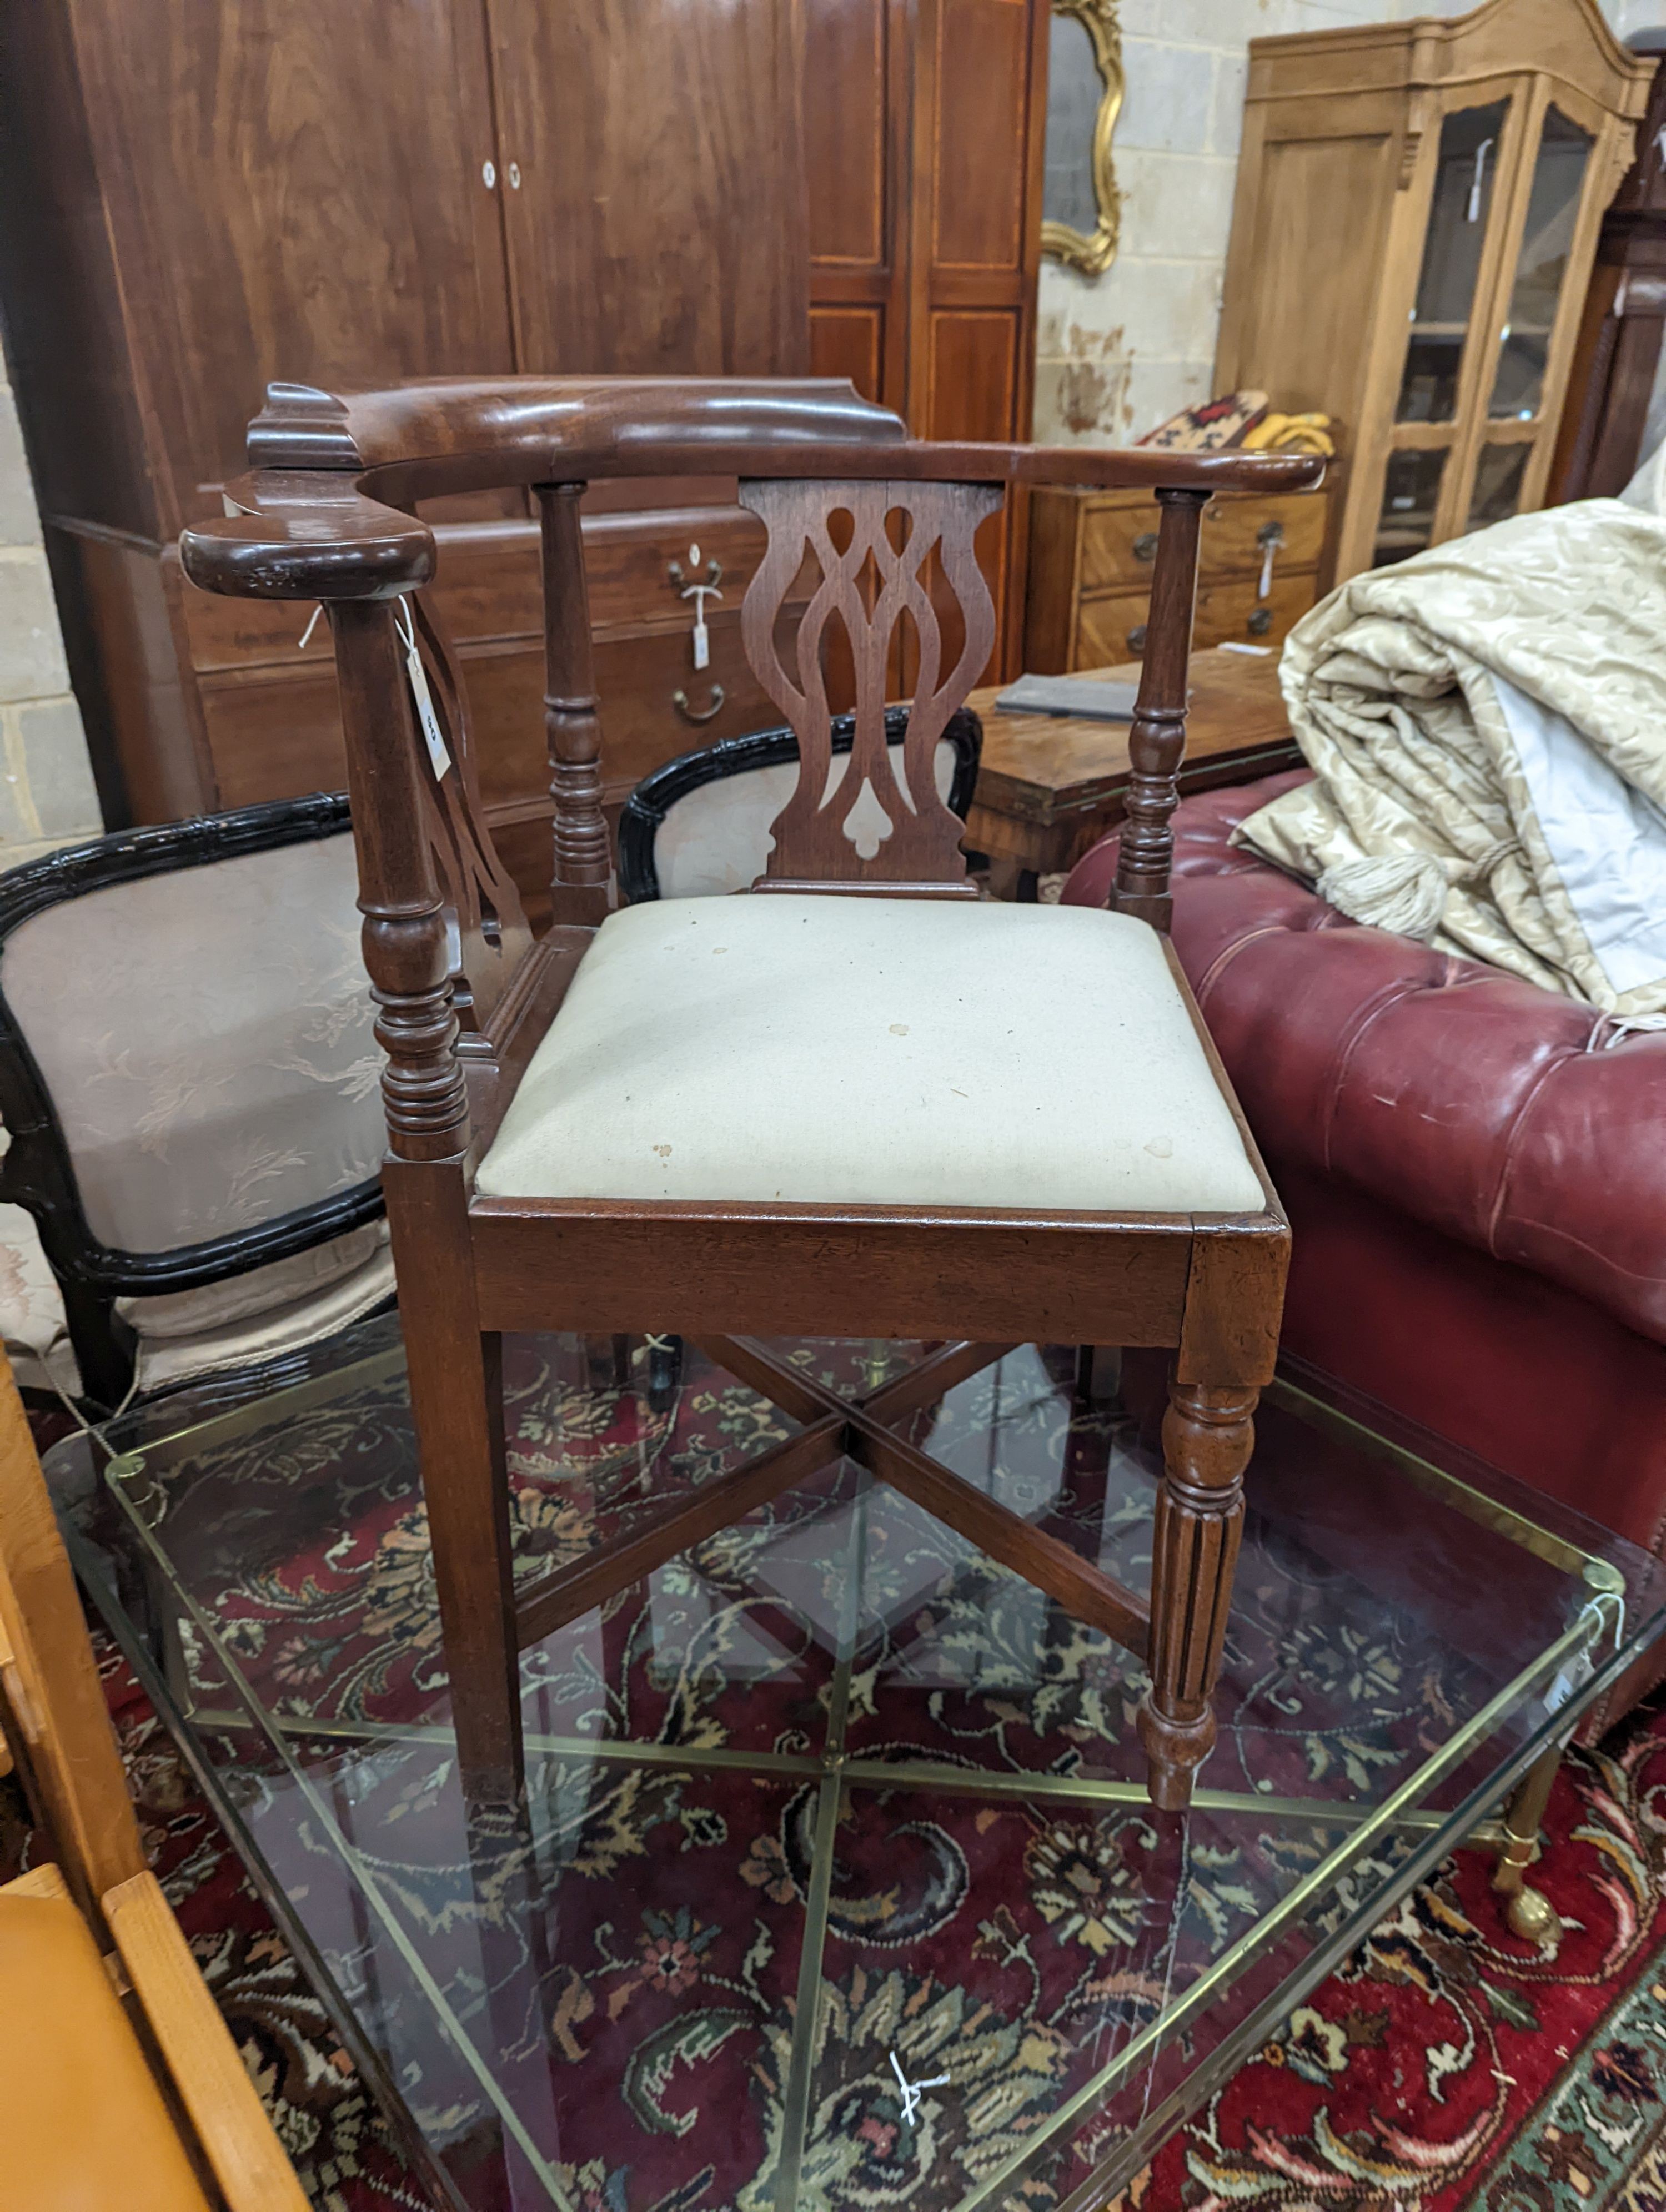 A George III mahogany corner elbow chair, width 76cm, depth 64cm, height 81cm